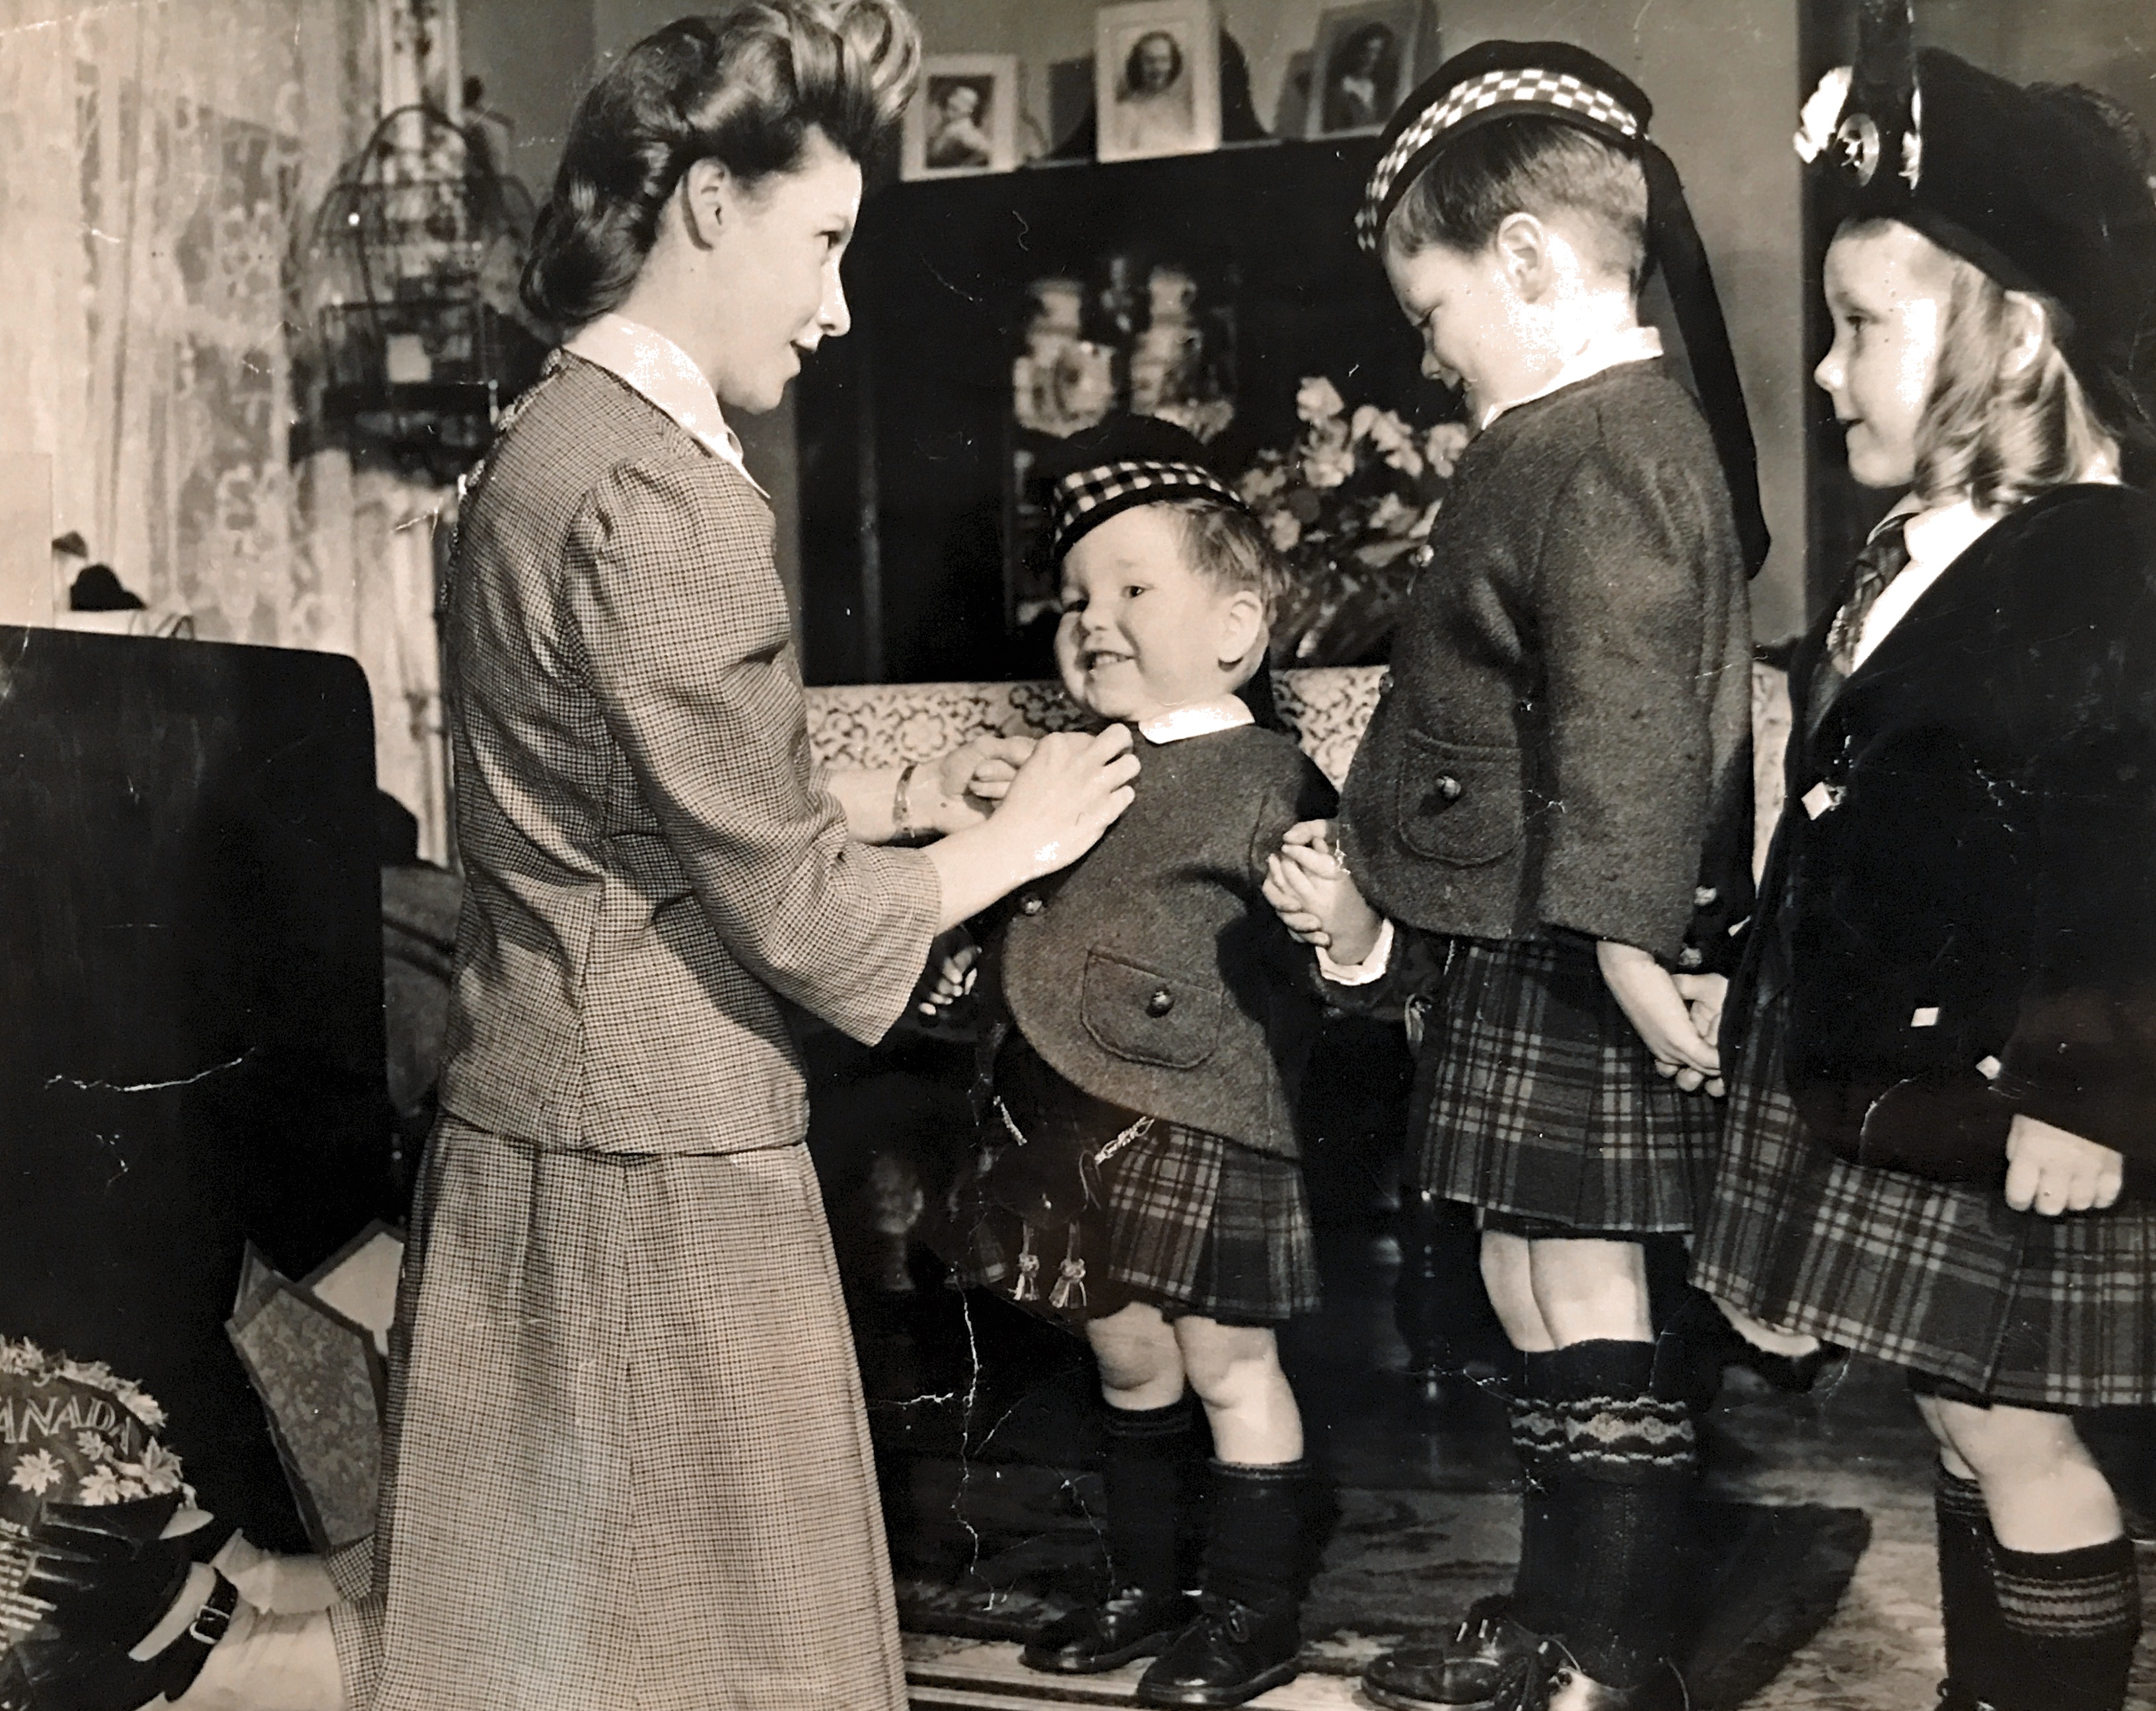 Violet (Lyell/Hervey) Tharp arriving in the USA with her children: Norman Reston Hervey, Francis Robert “Frank” Hervey, and Sandra Eileen (Hervey/Witczak) Francis.
Taken April 1947.